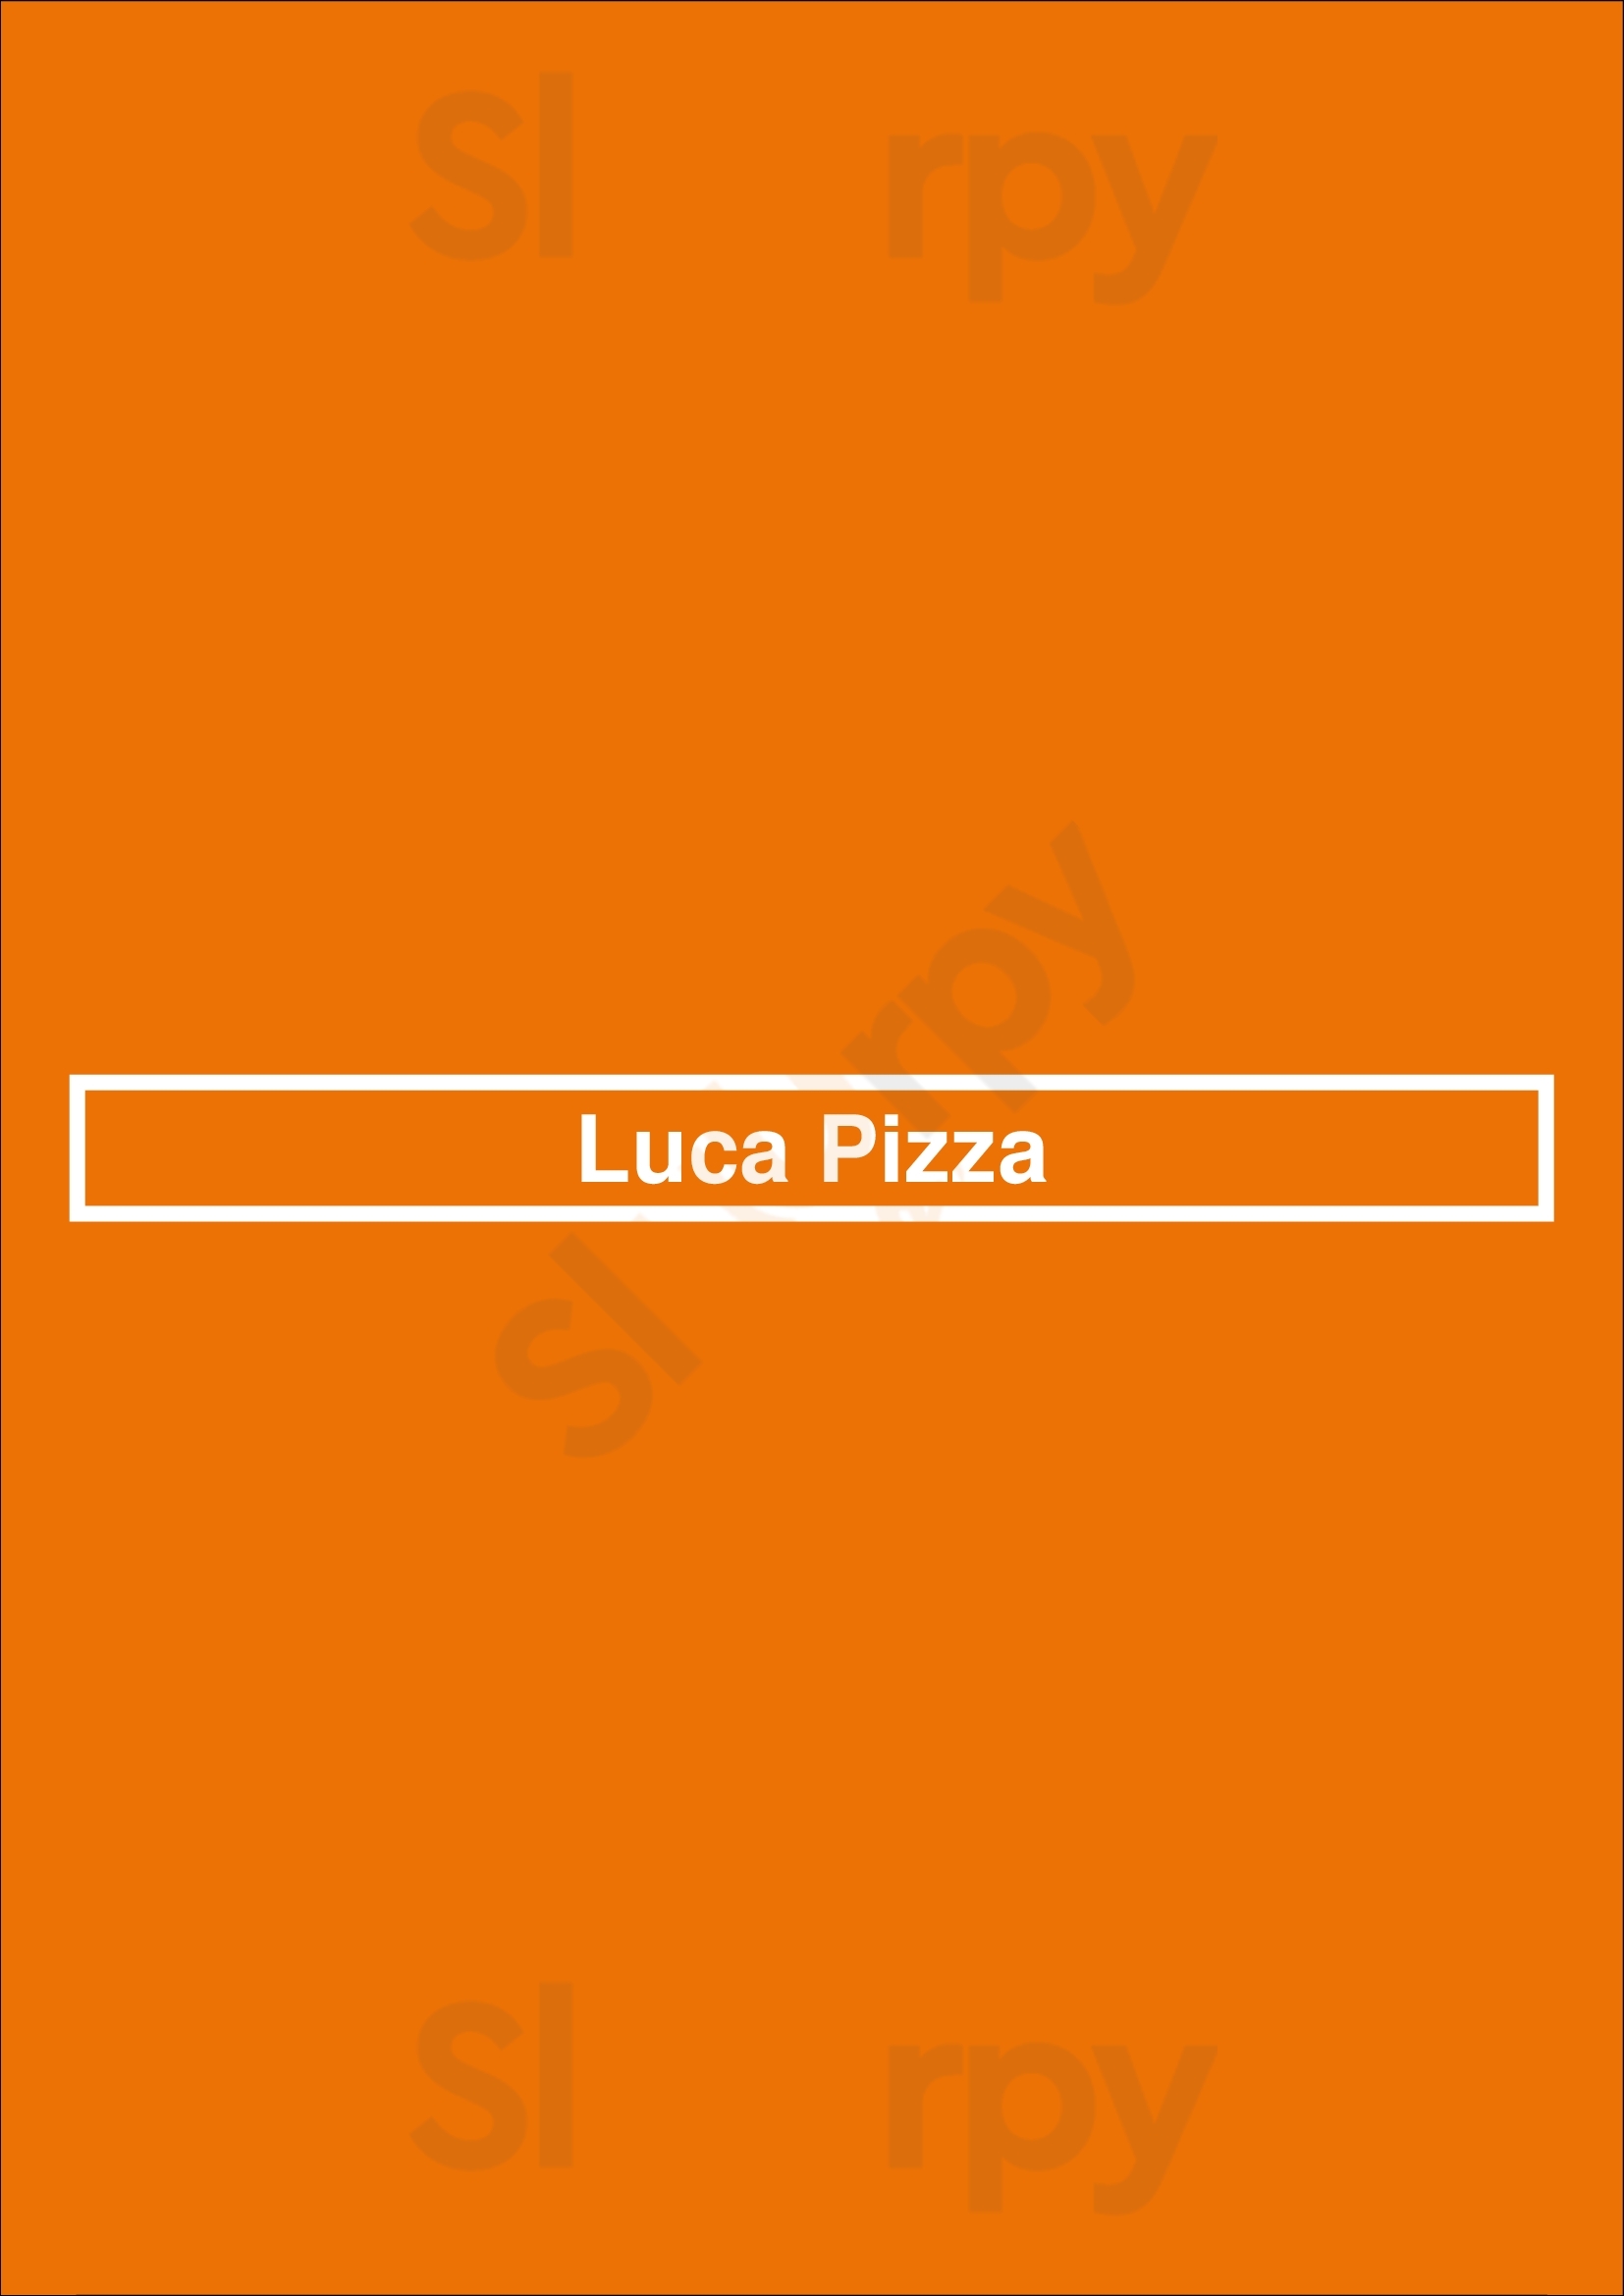 Luca Pizza Mississauga Menu - 1